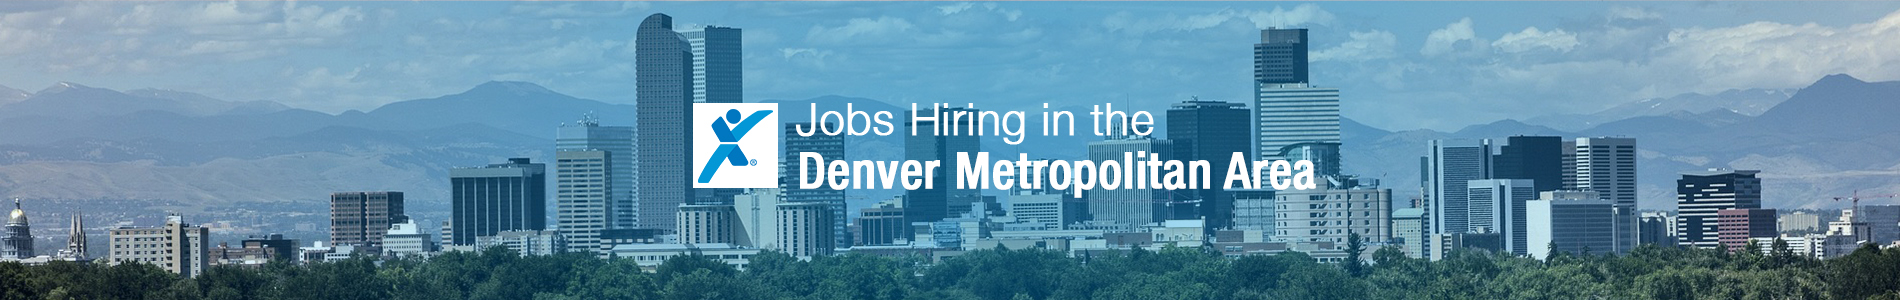 Express Hiring - Jobs near me in Denver, CO